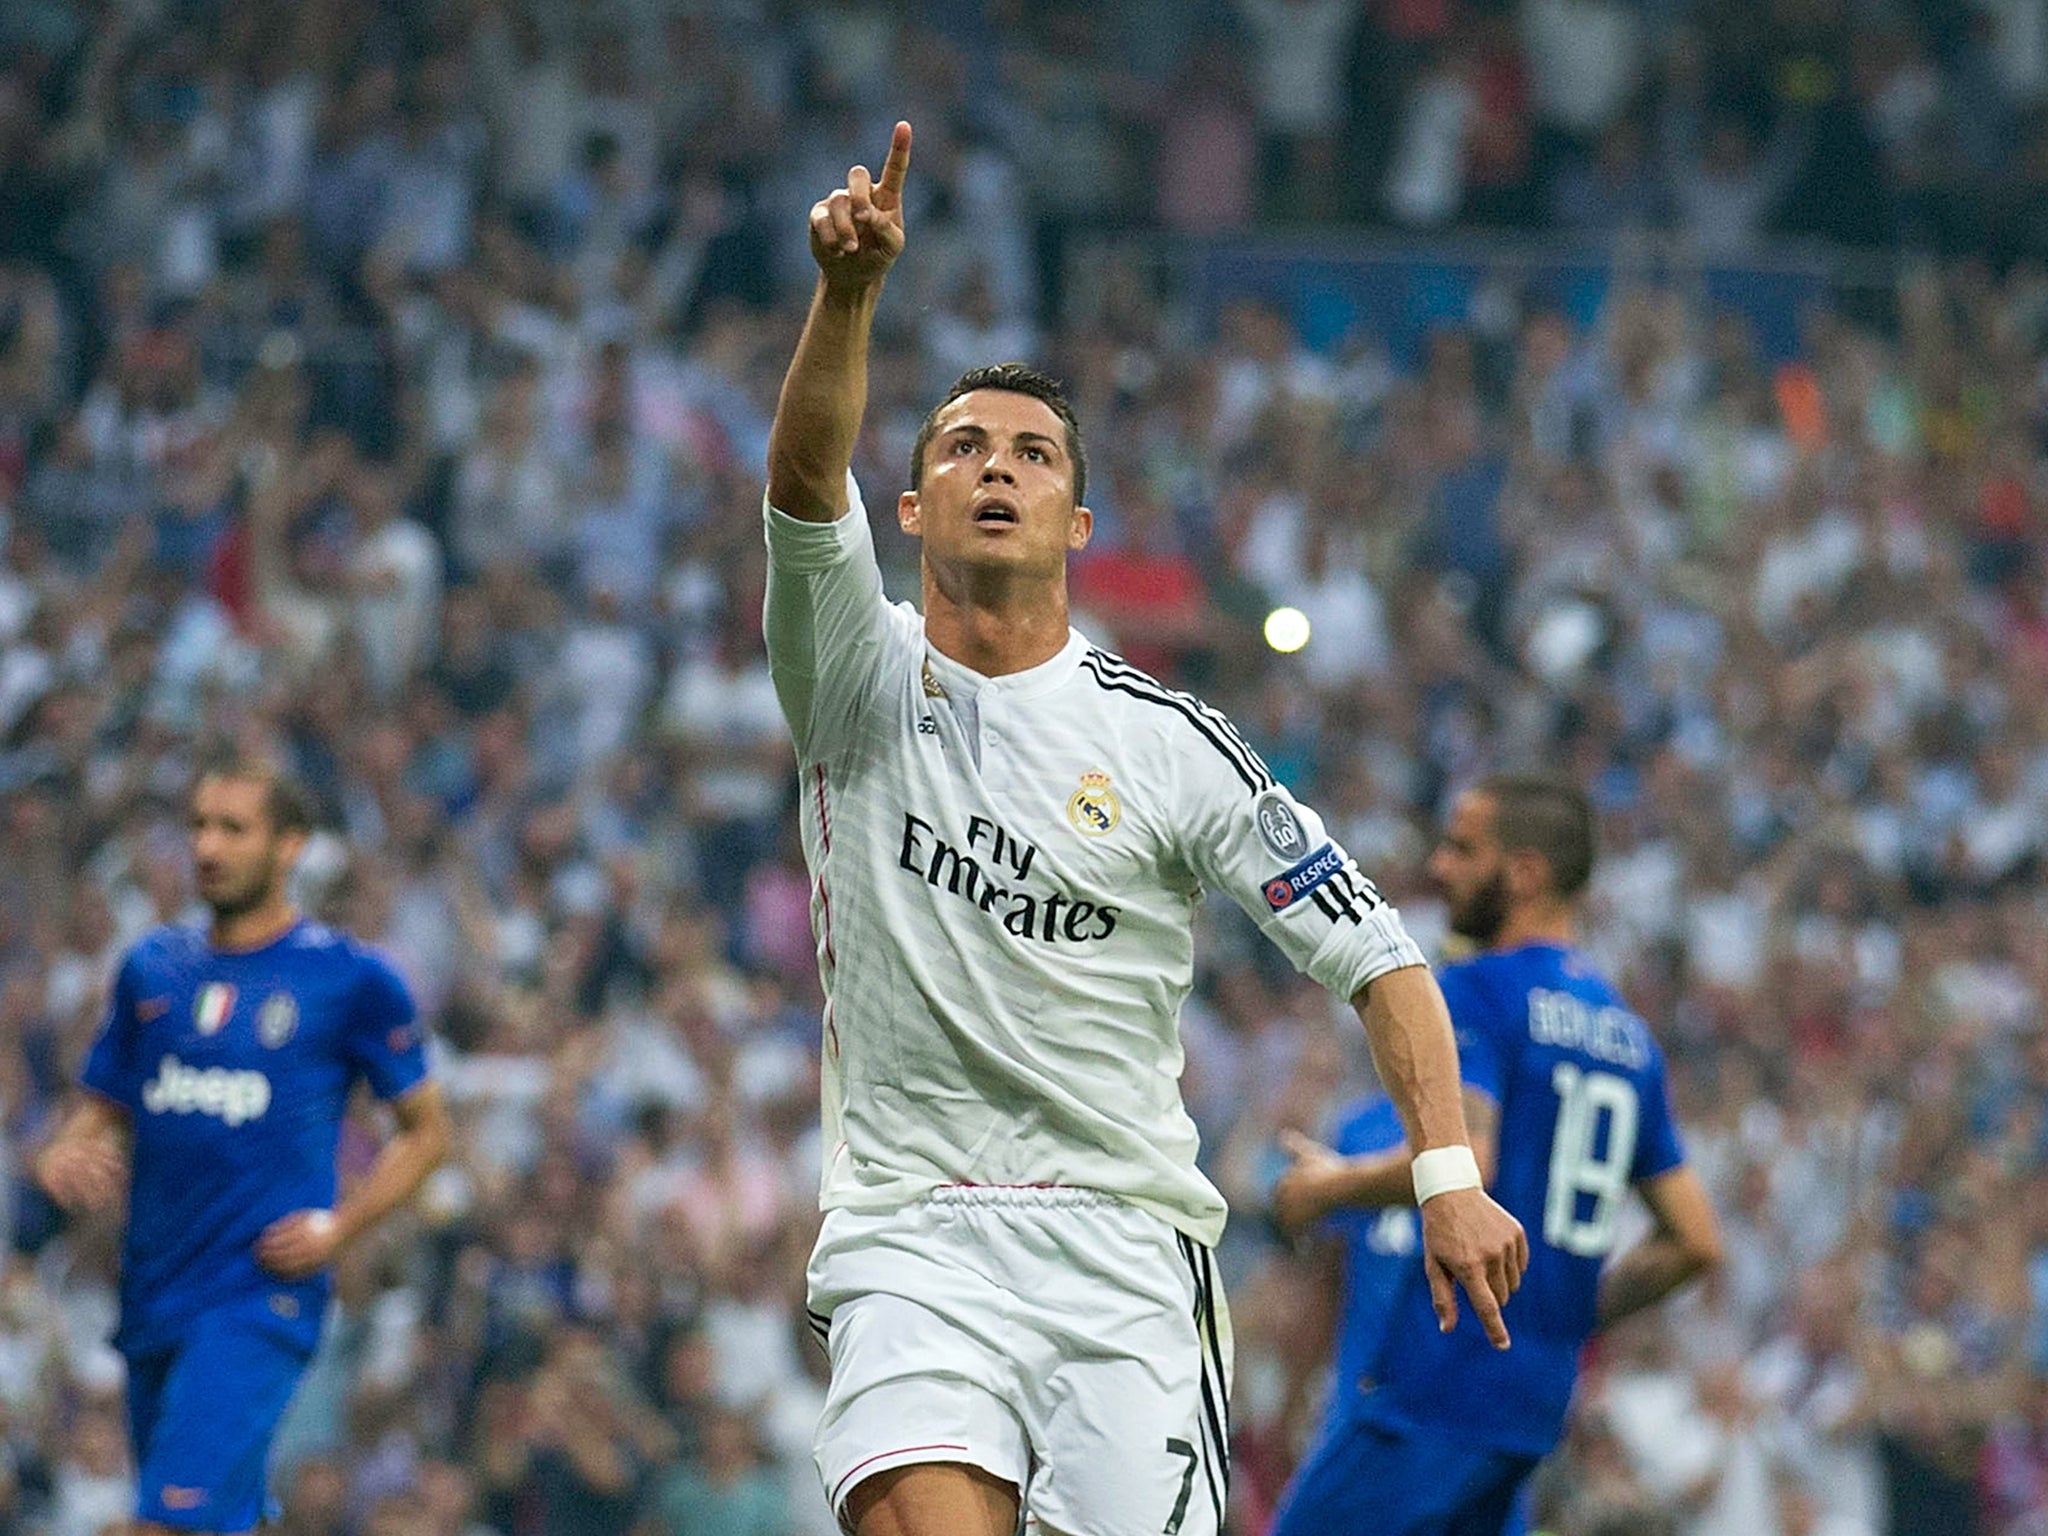 Real Madrid forward Cristiano Ronaldo has sent a video to Steven Gerrard